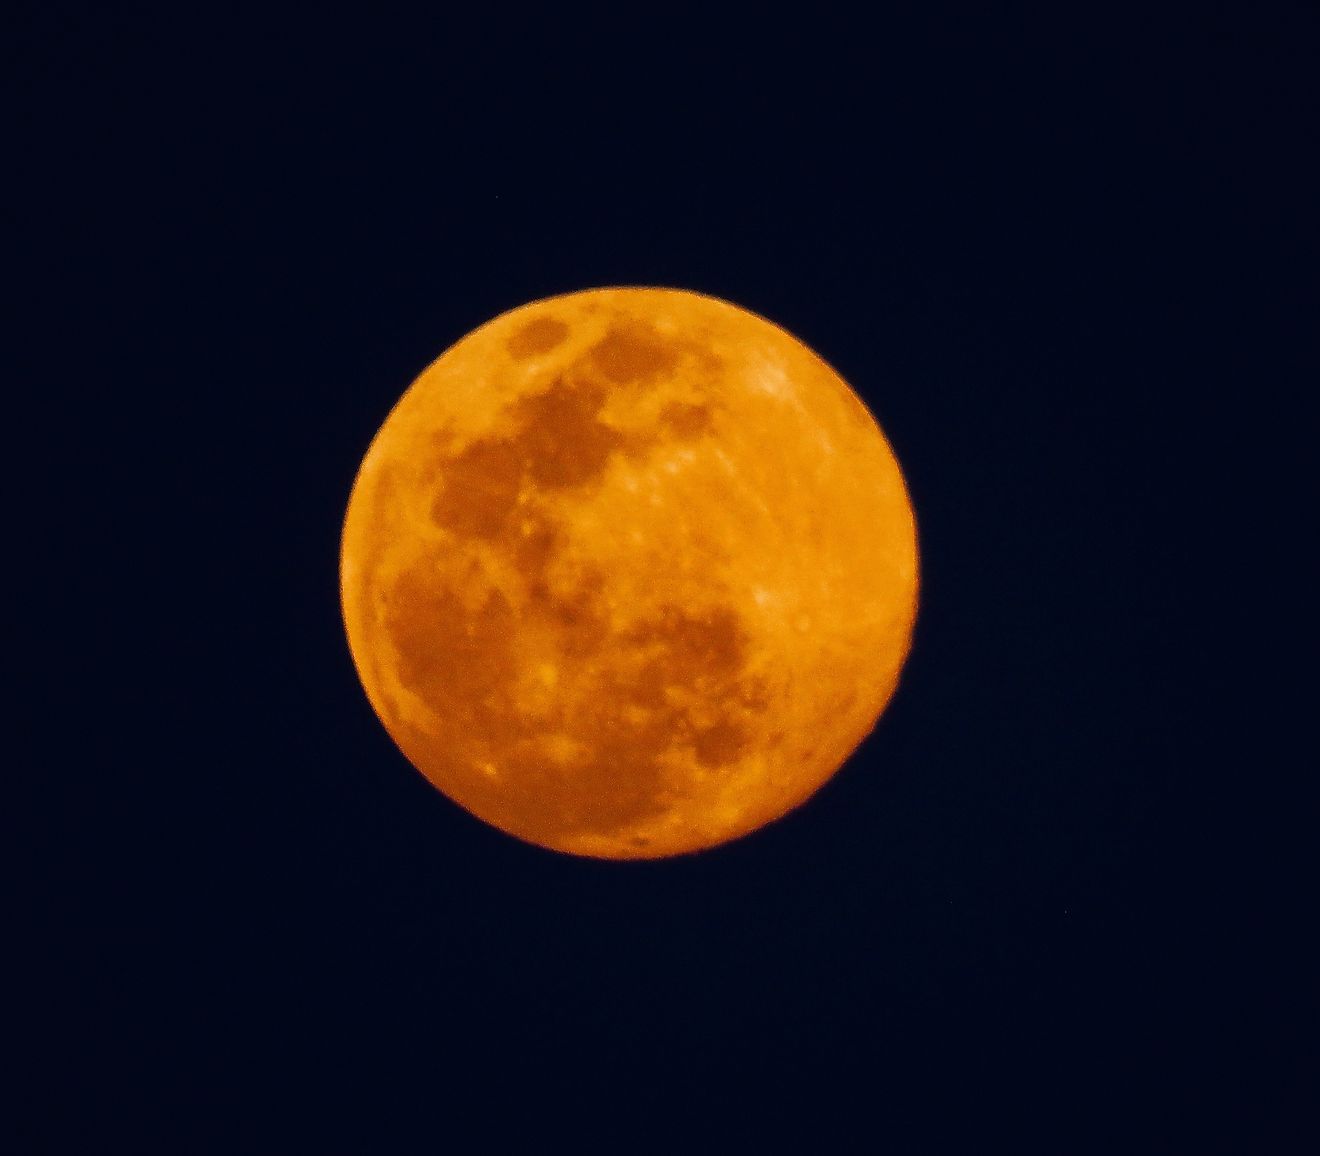 The Super Pink Moon as seen on April 7. Image credit: Oishimaya Sen Nag